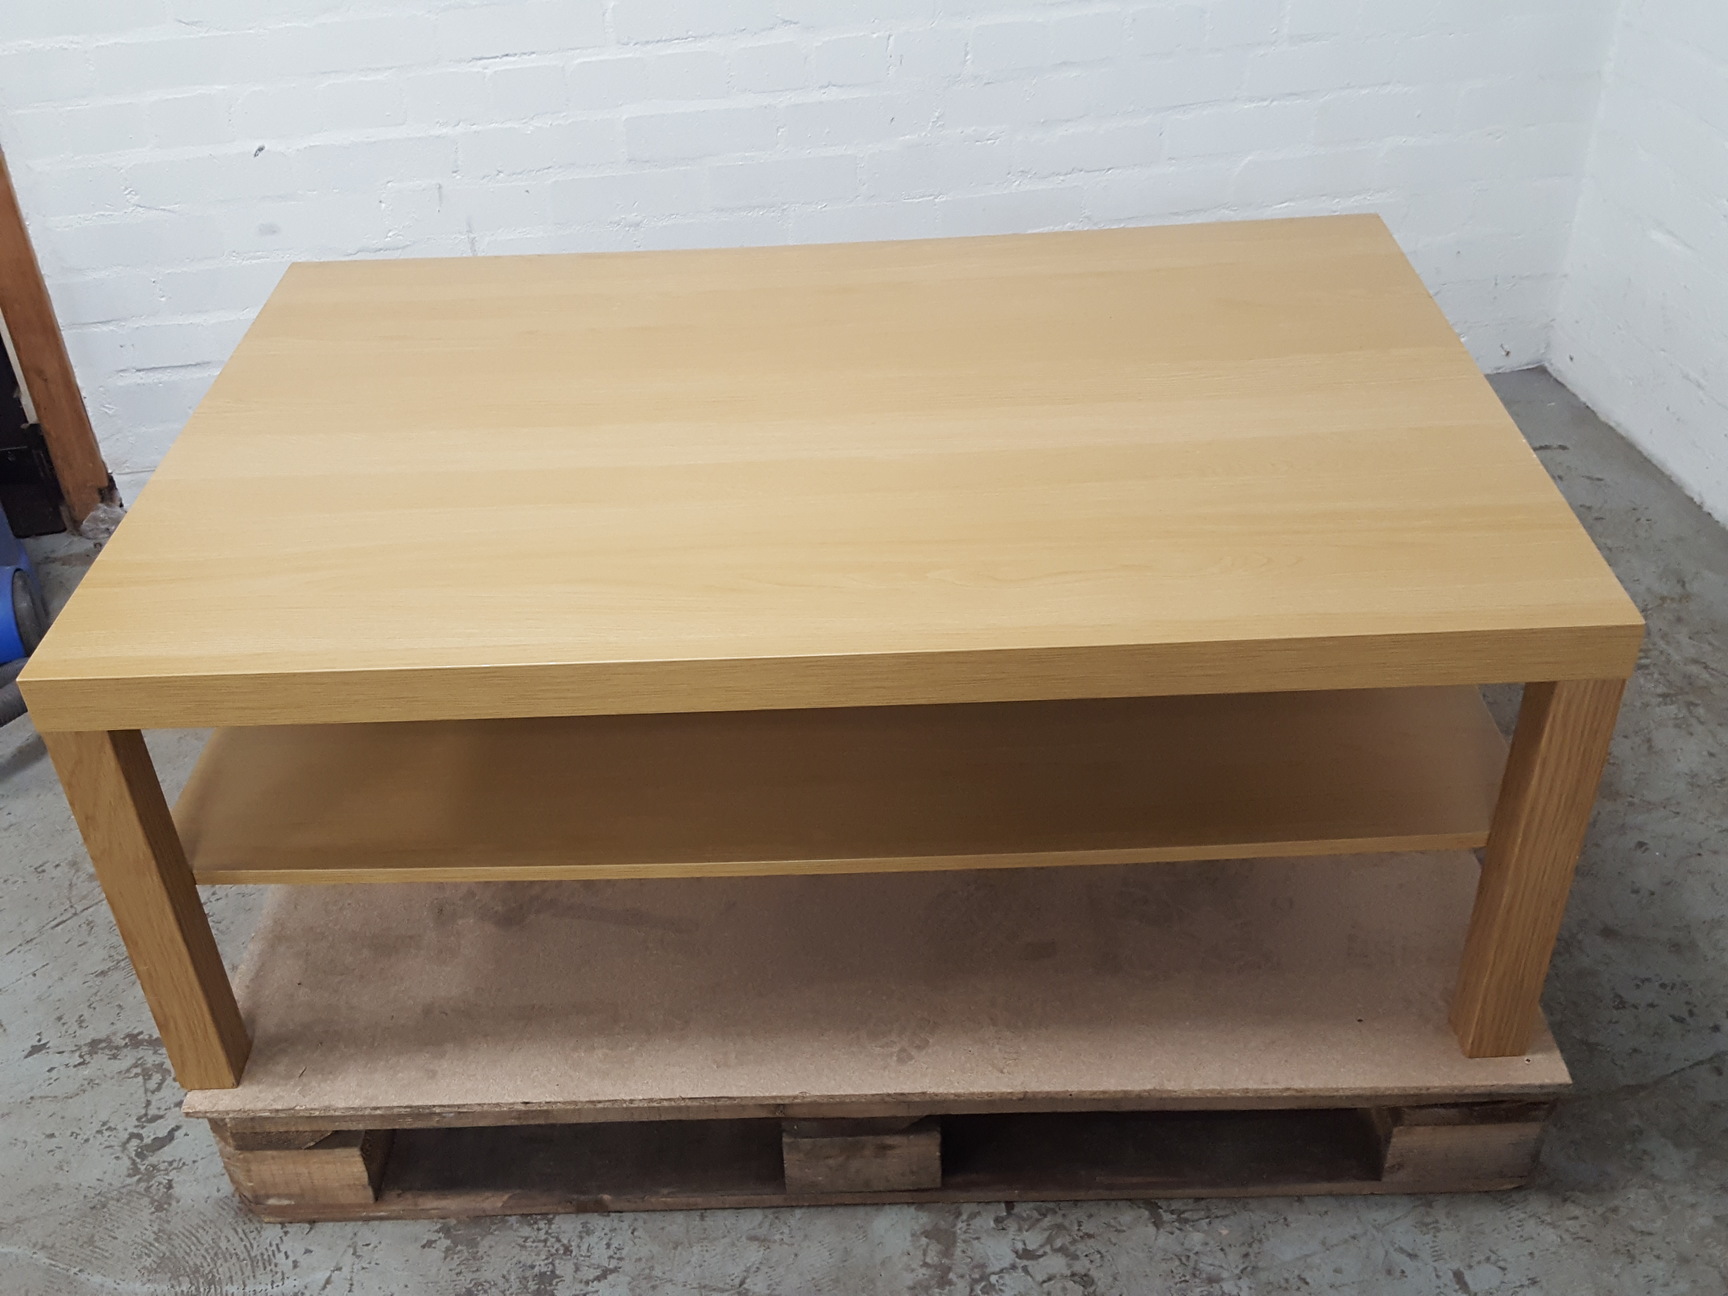 Office 2-Tier Lounge Wooden Table Ikea Coffee Table 78cm w x 118cm l x